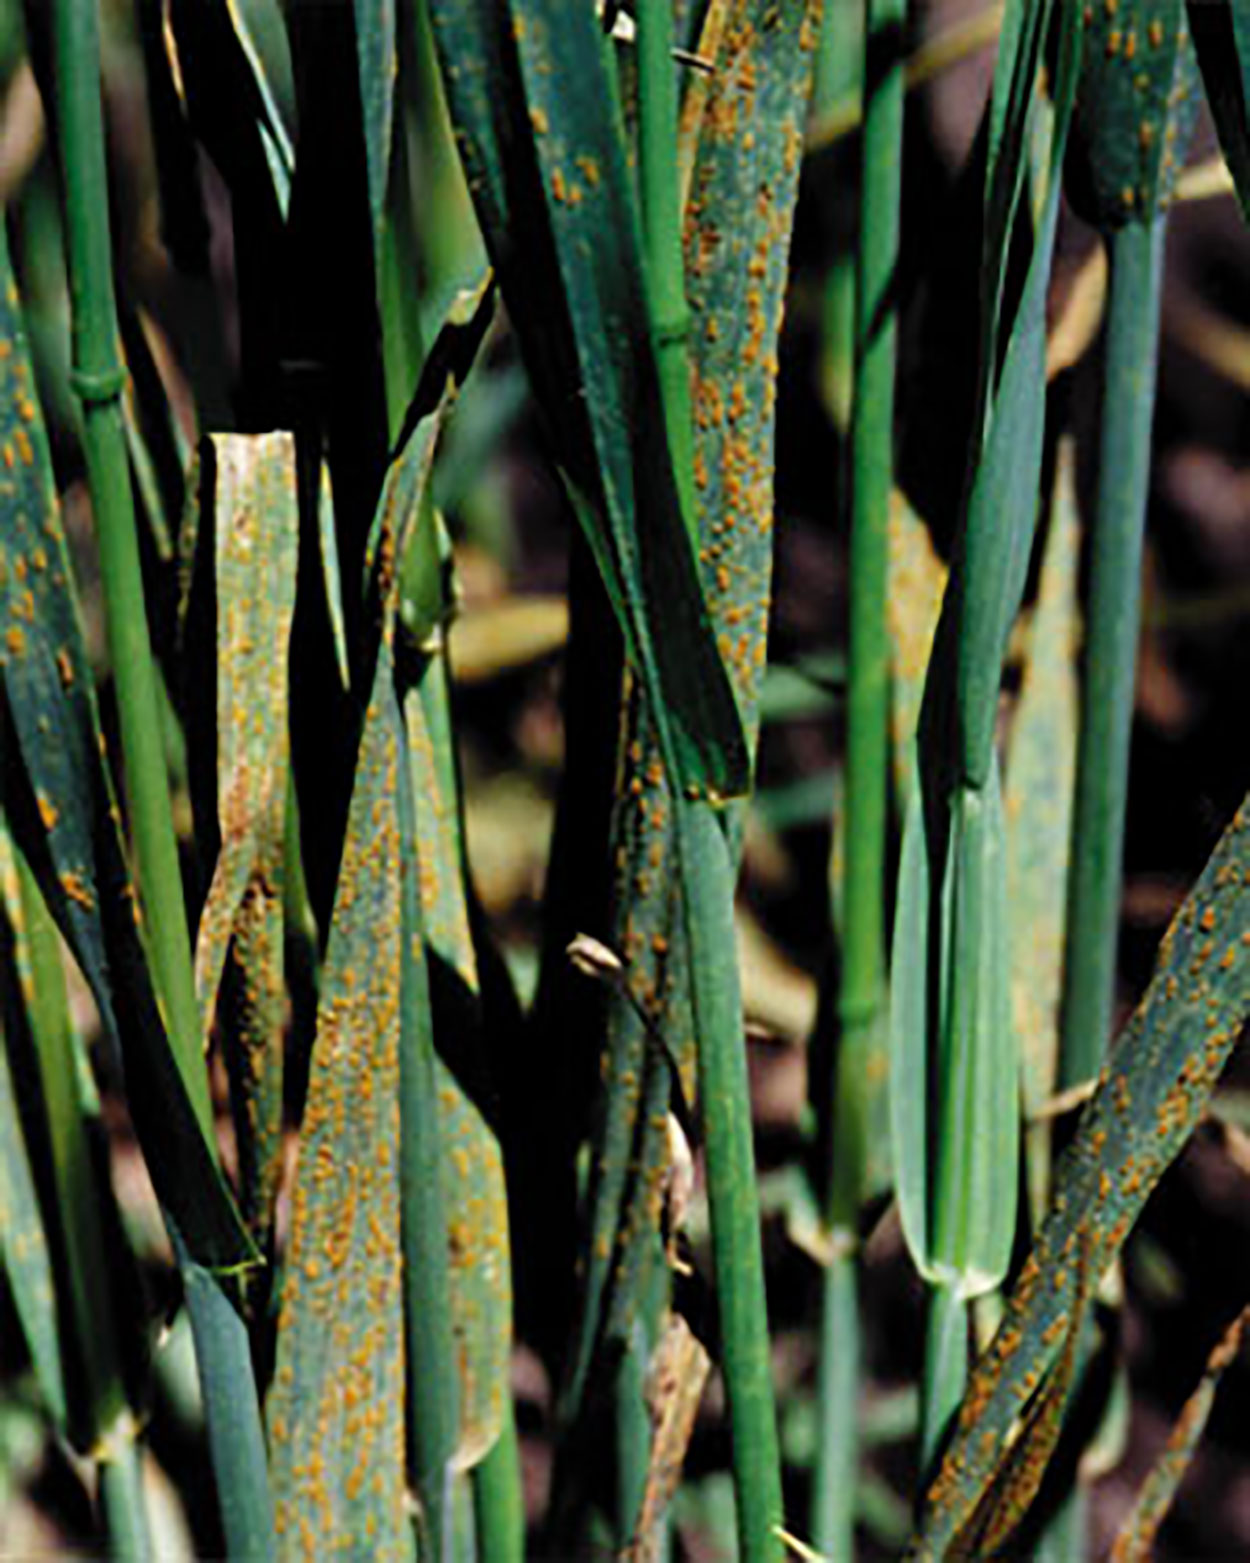 Oat plants exhibiting crown rust symptoms.